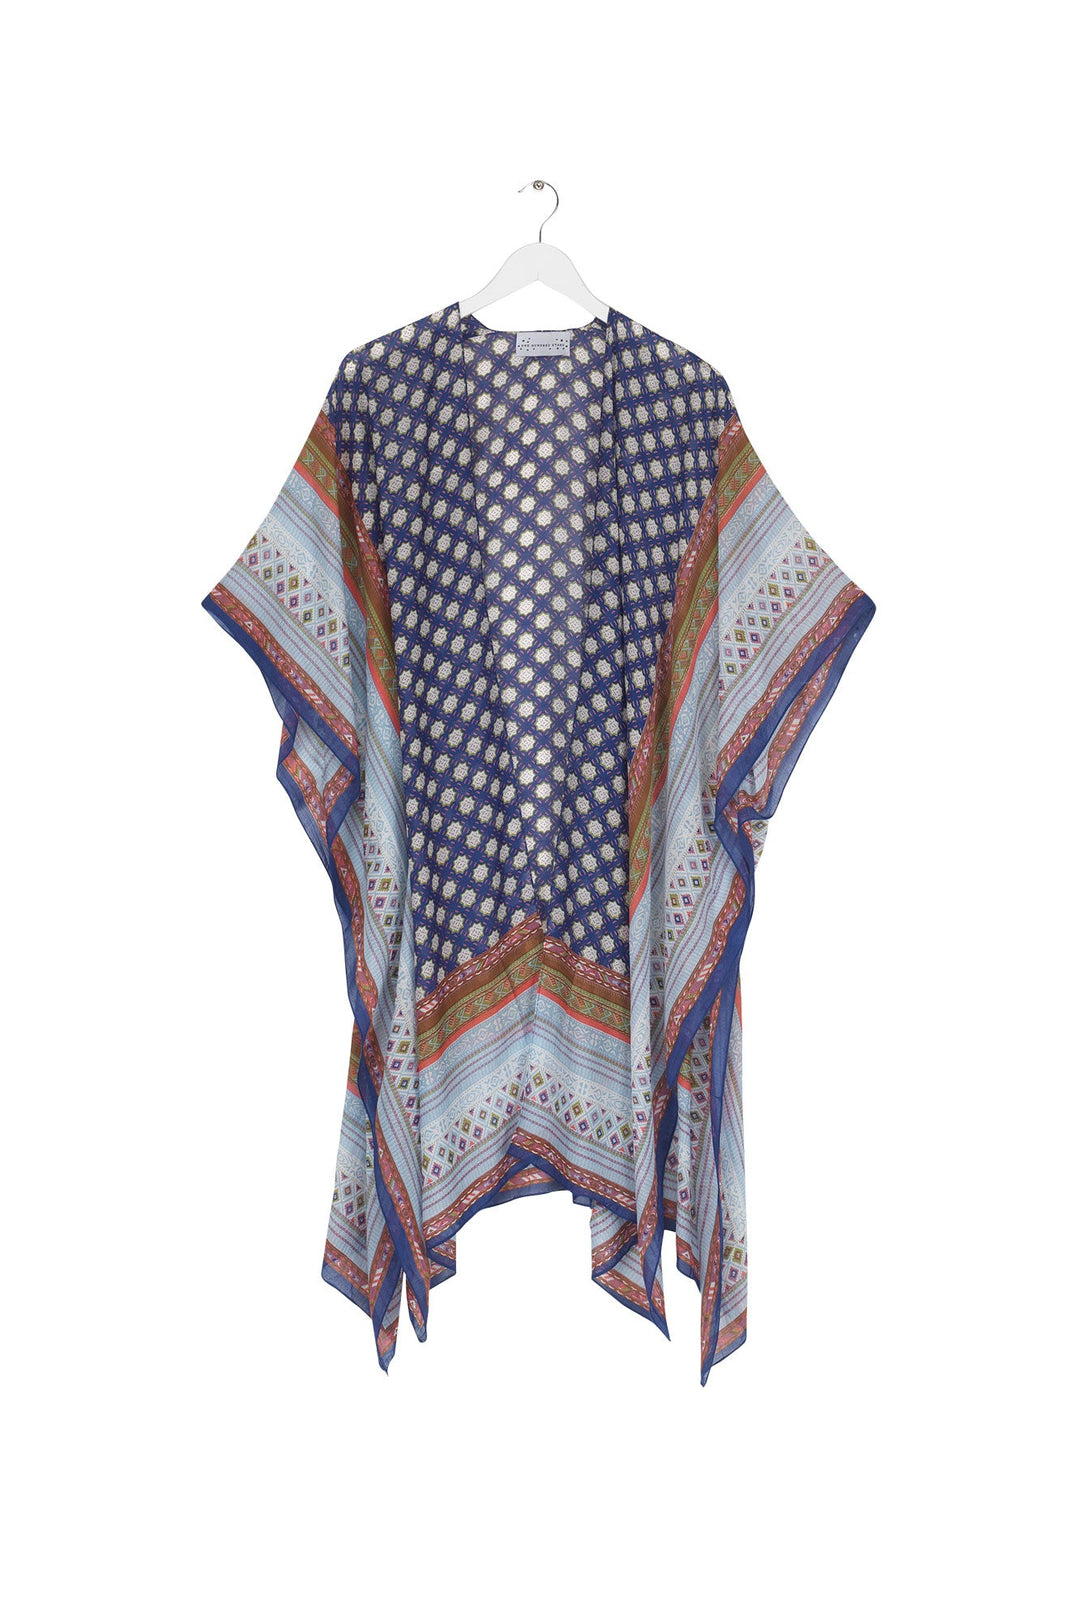 Women's lightweight throwover shawl in indigo with moorish print by One Hundred Stars